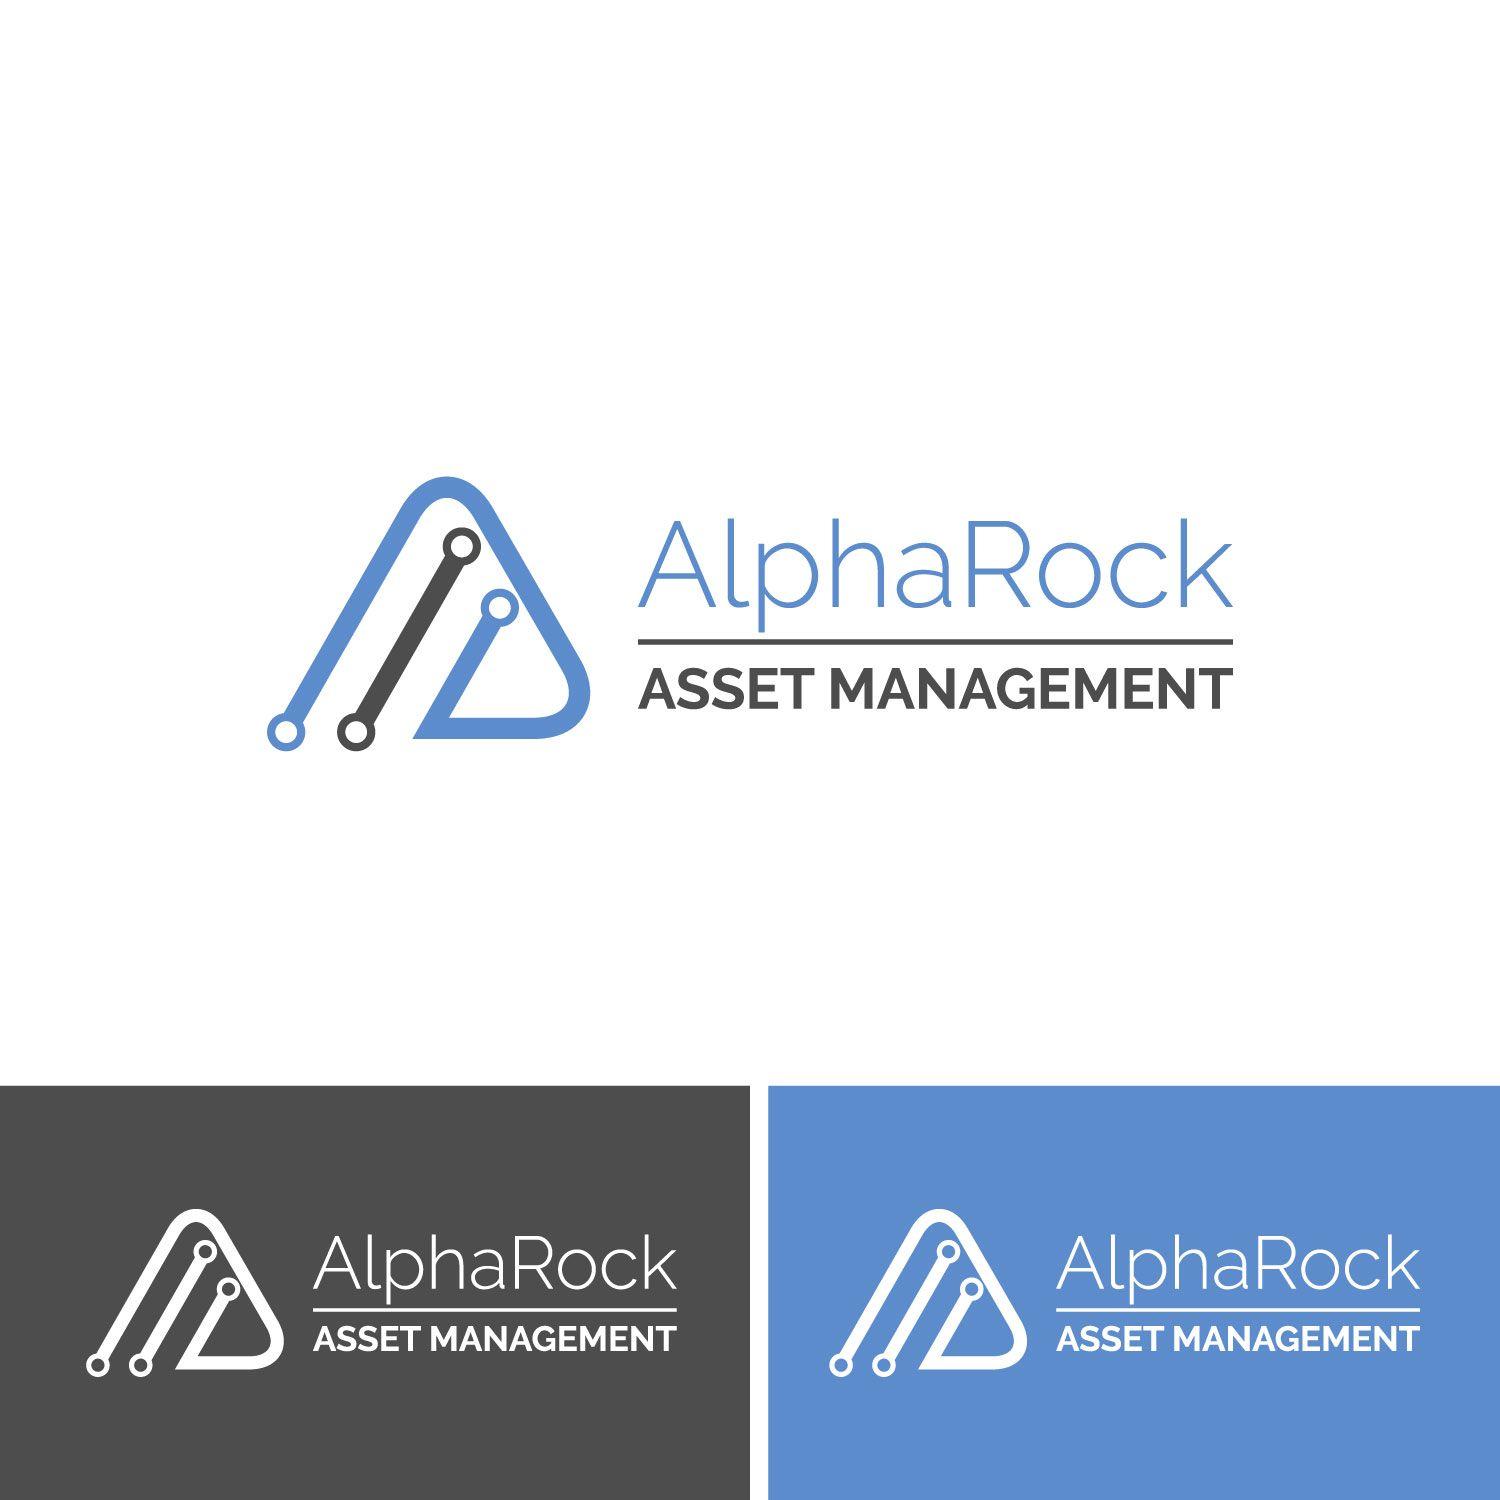 Freeman Company Logo - Logo Design for AlphaRock Asset Management